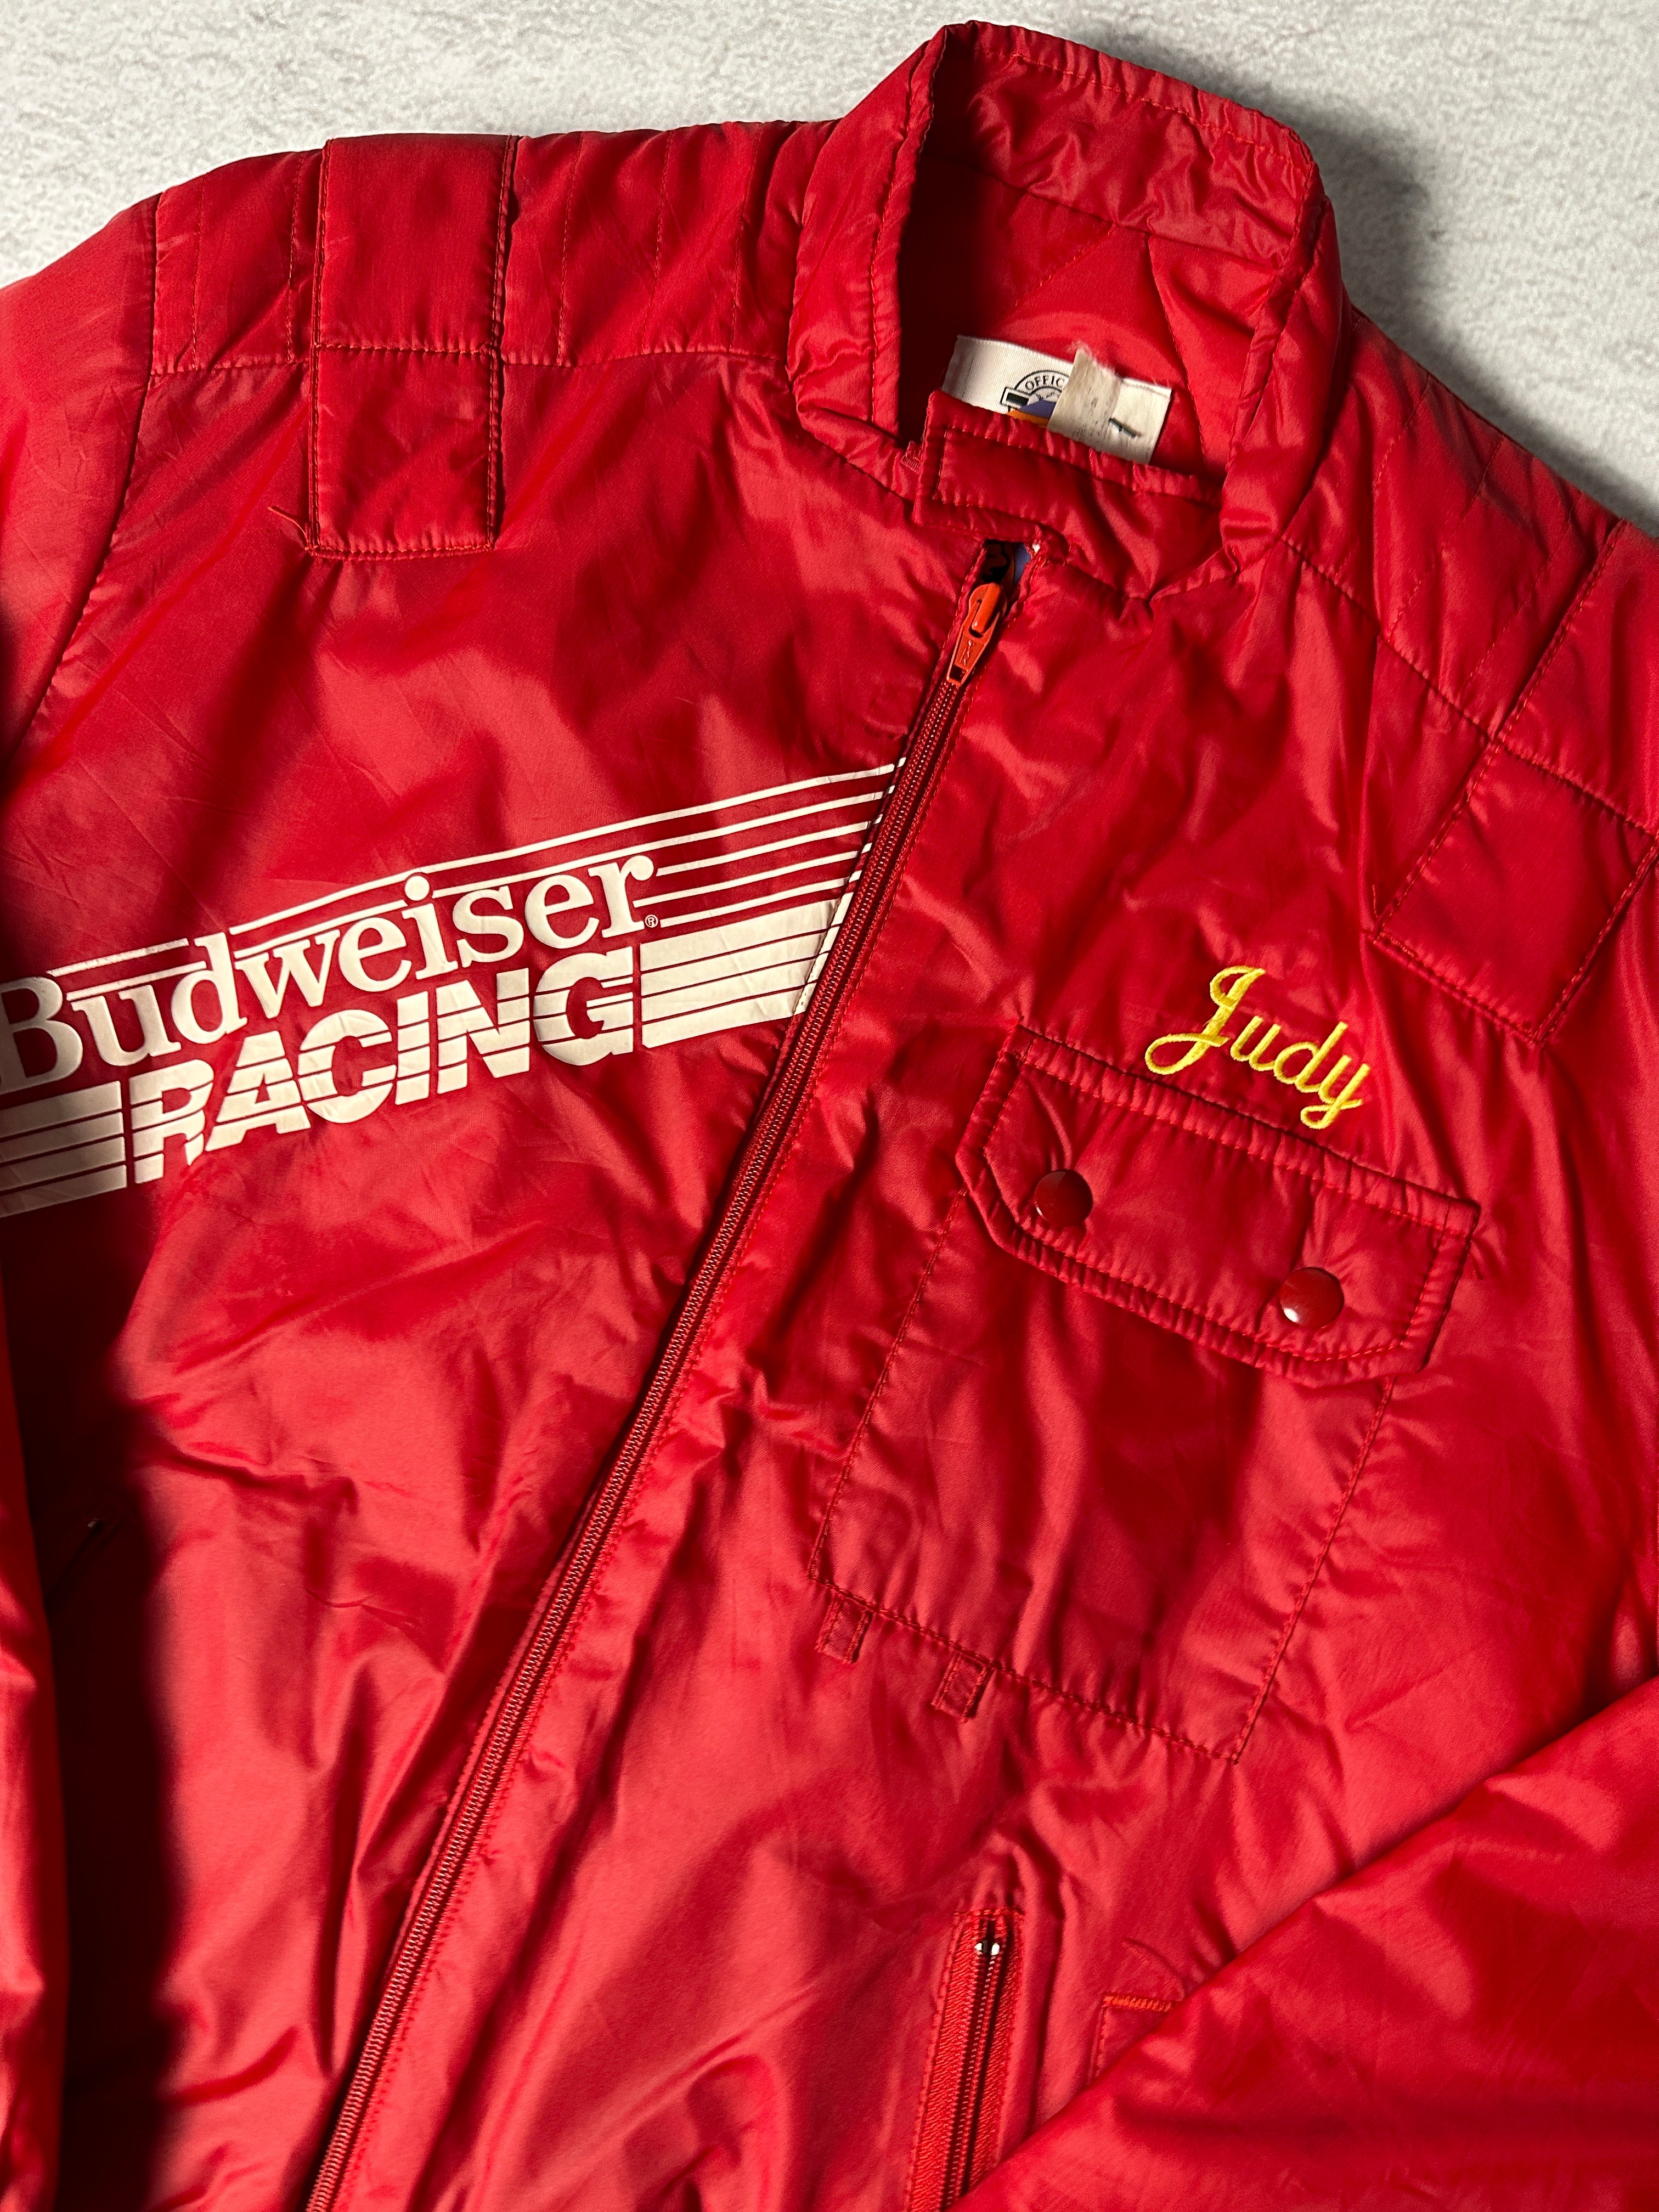 Vintage Nascar Budweiser Racing Jacket - Women's Medium